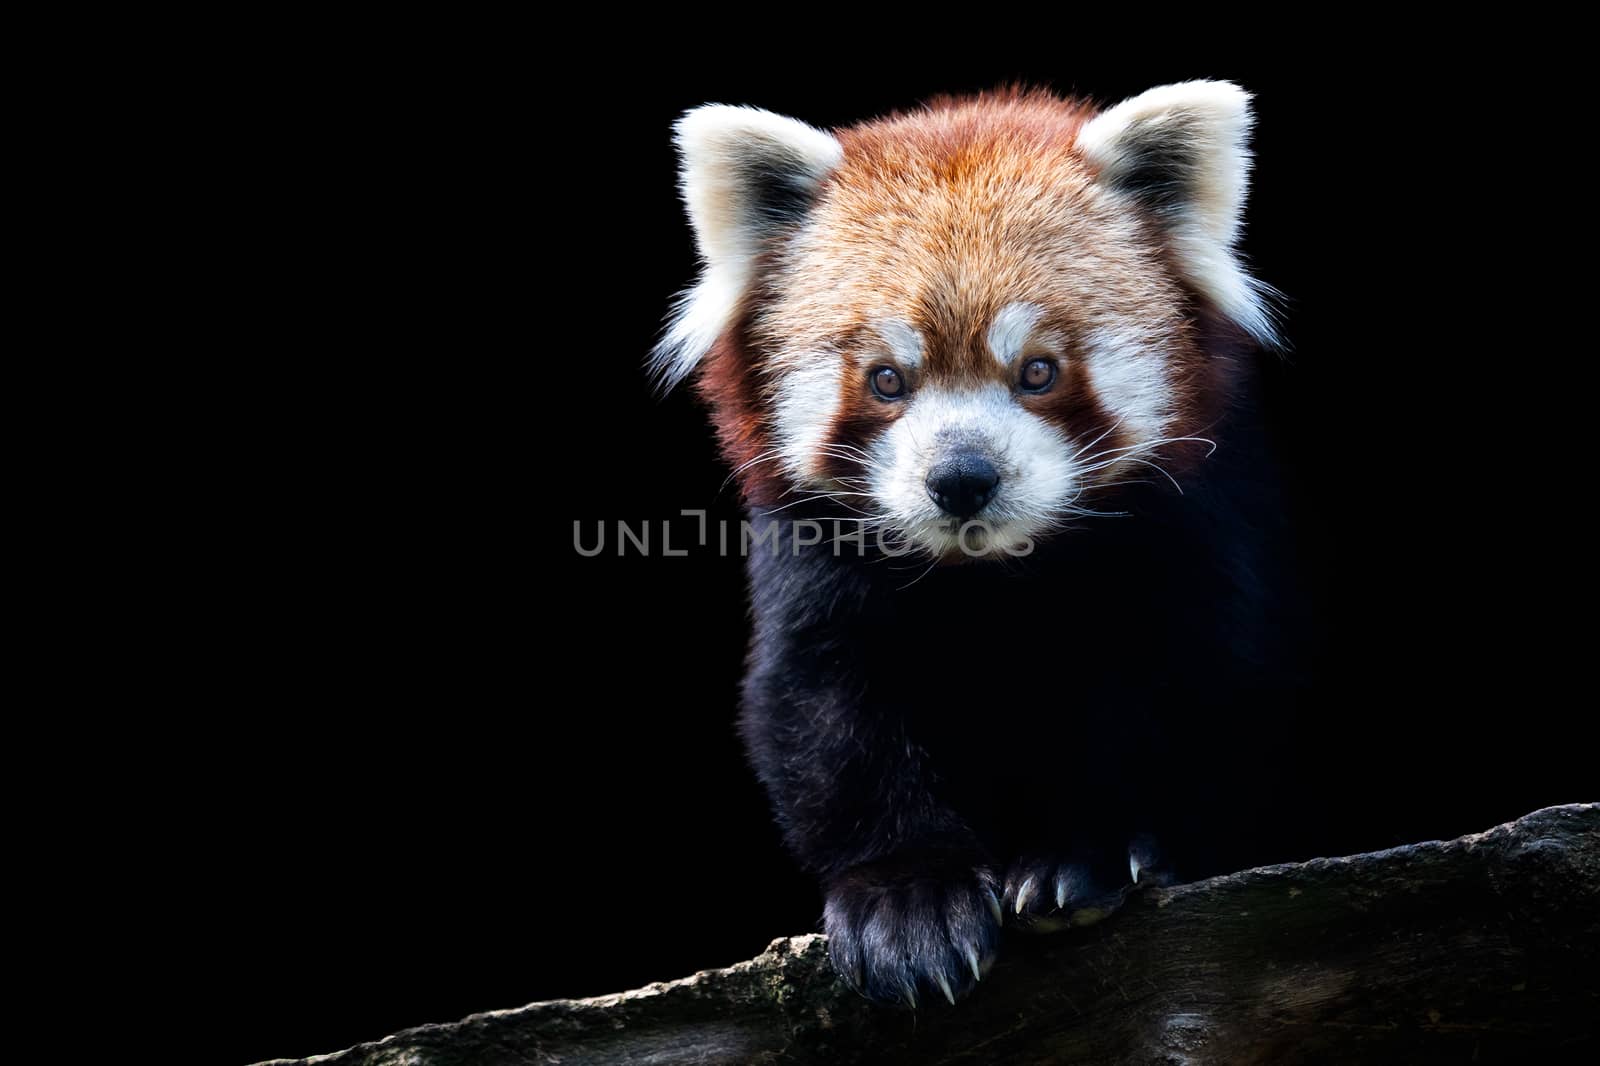 Portrait of a red panda (Ailurus fulgens) isolated on black background